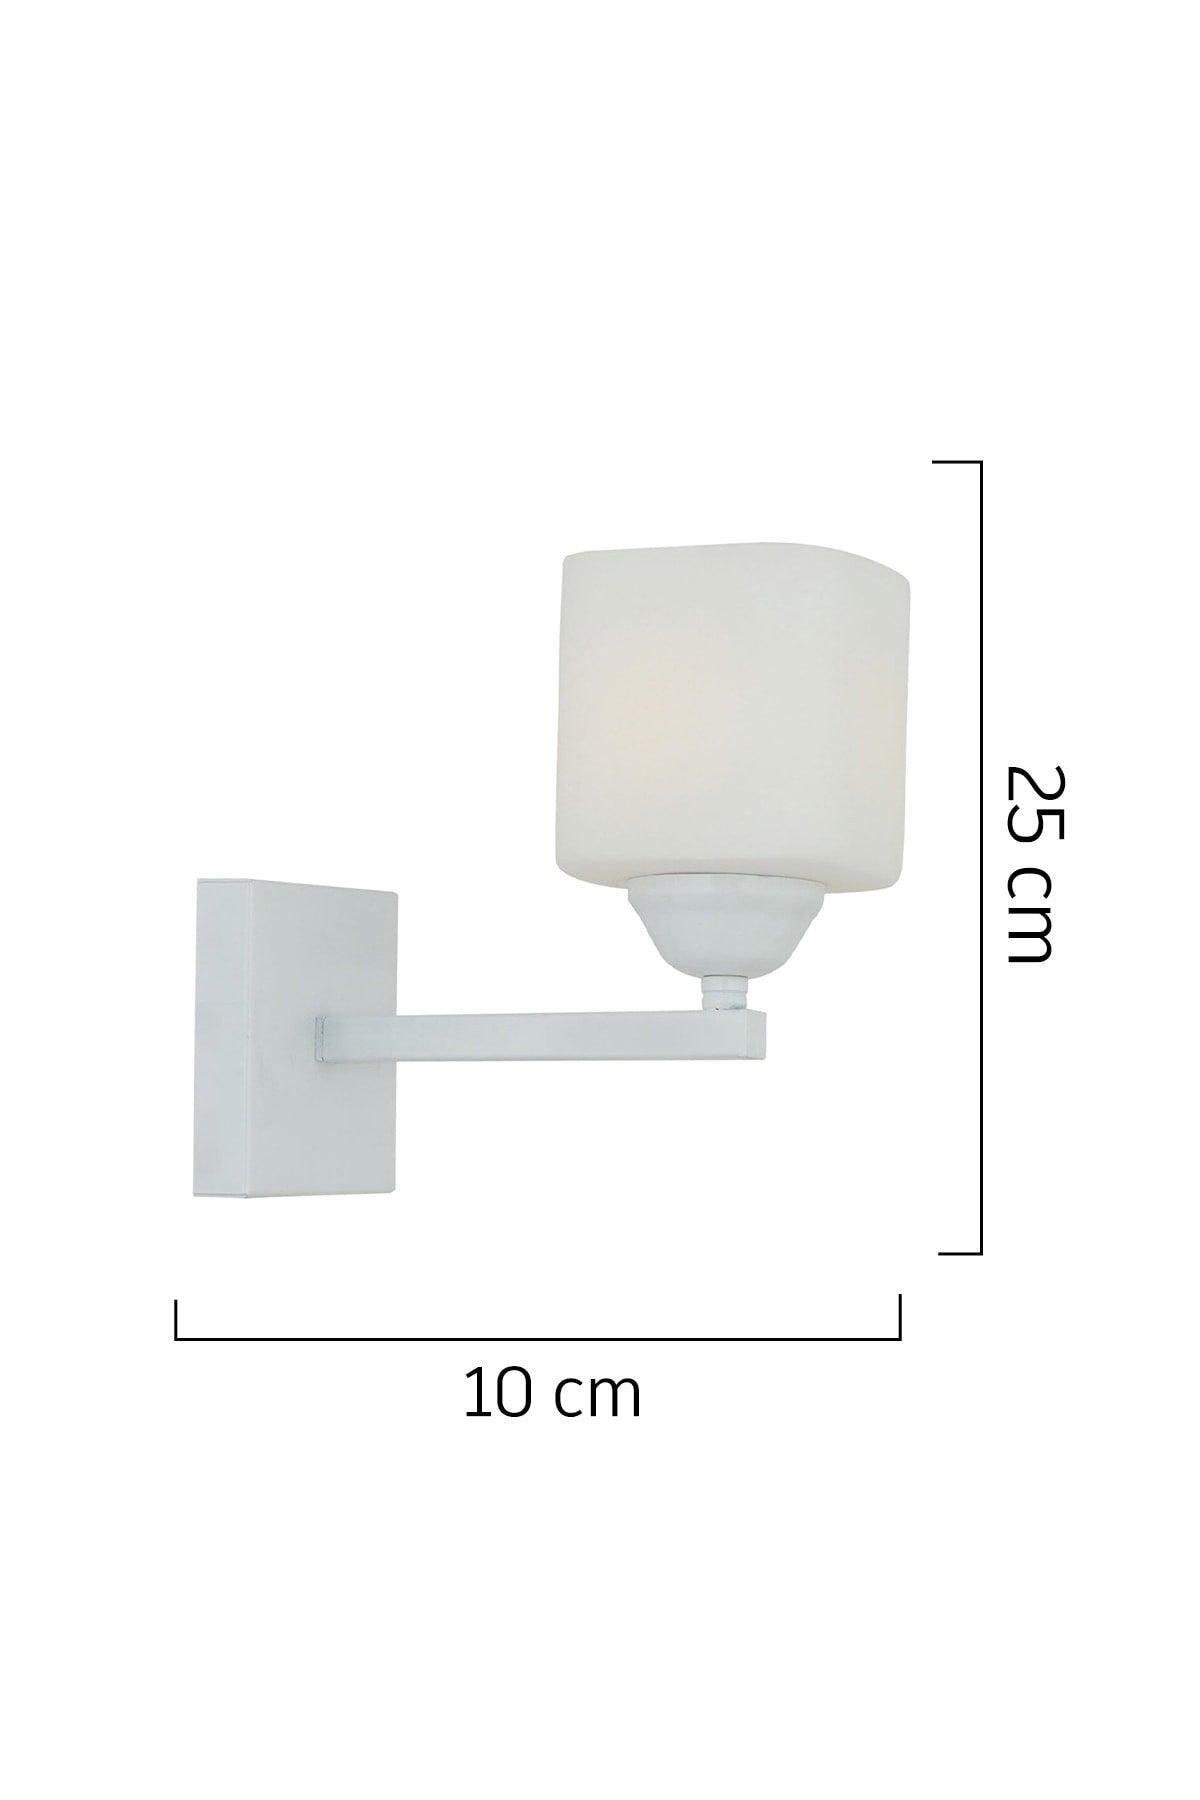 Minel White Wall Lamp Modern Wall Sconce For Bedroom-Bedhead-Bathroom - Swordslife